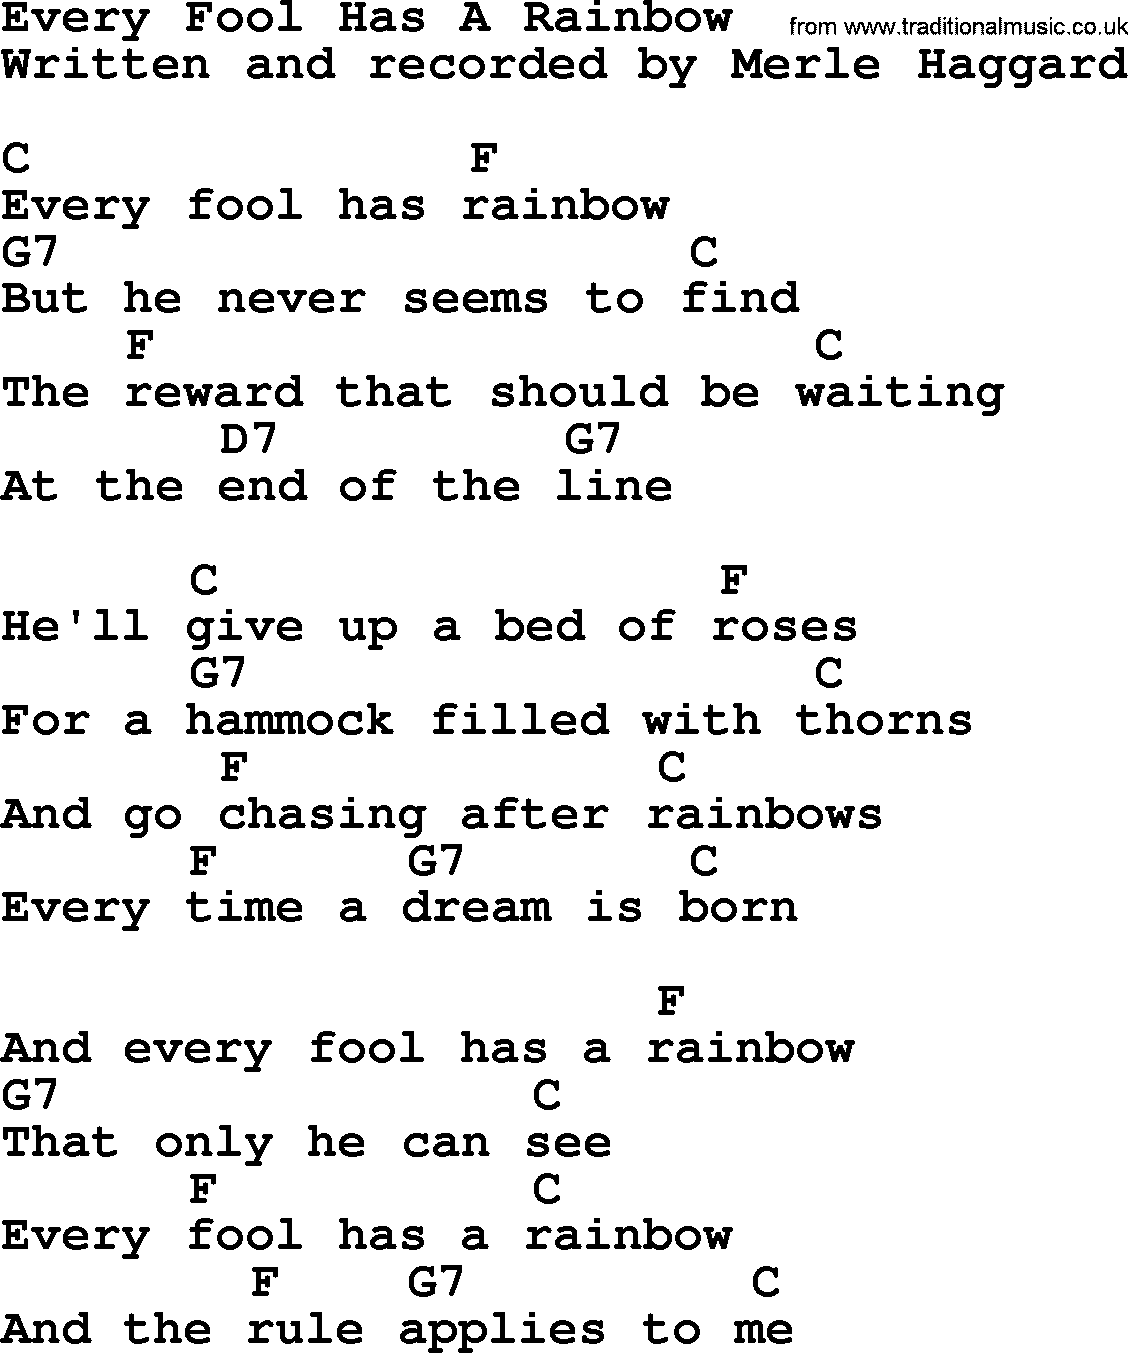 Merle Haggard song: Every Fool Has A Rainbow, lyrics and chords